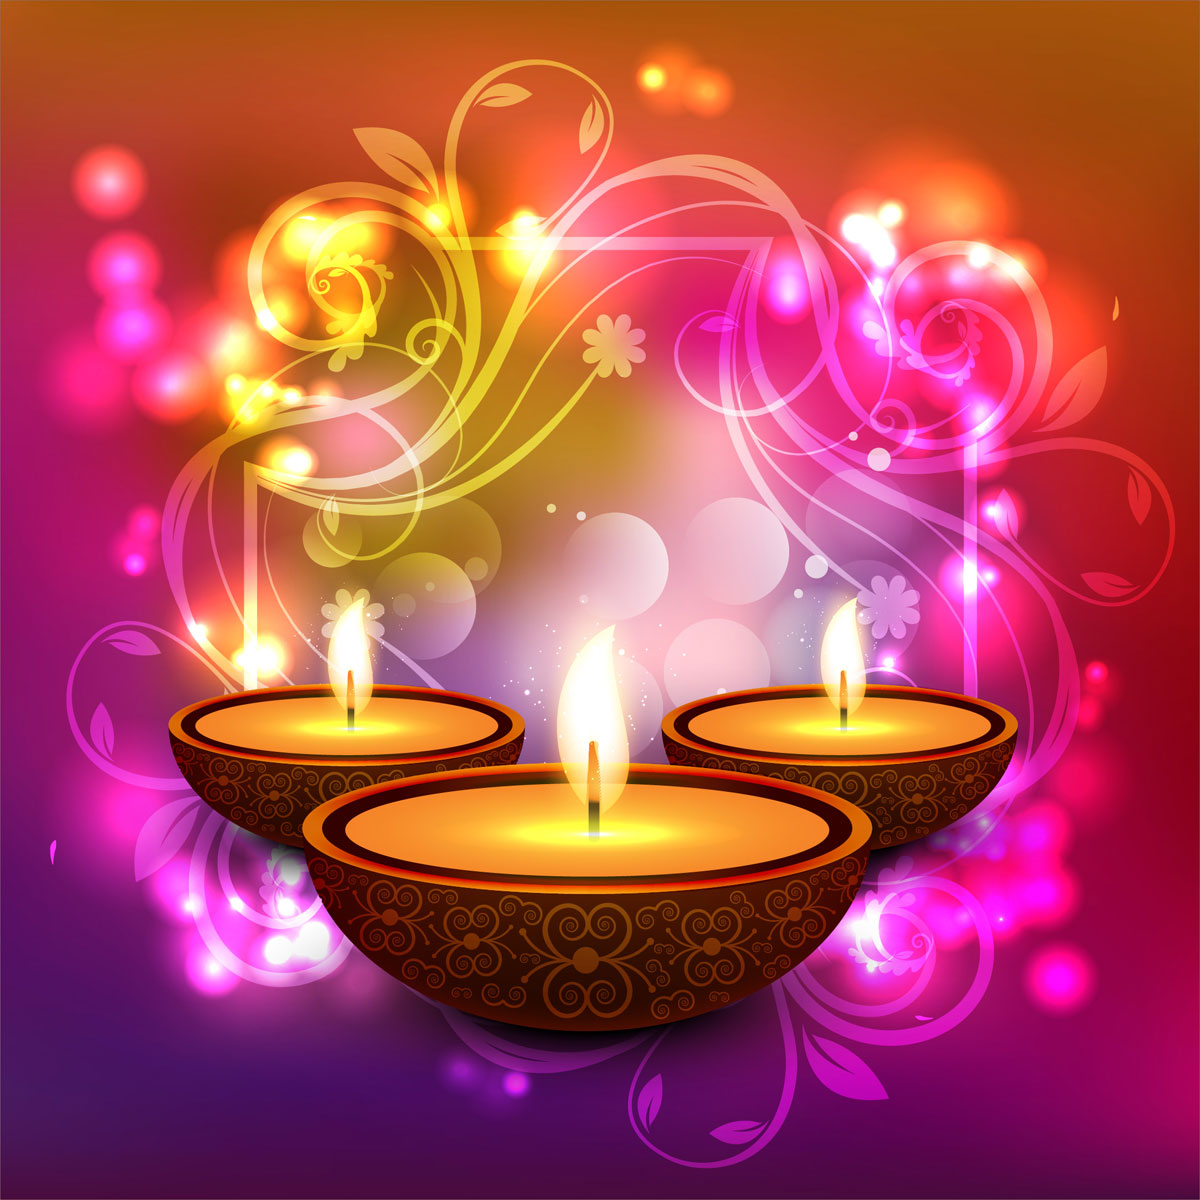 Happy diwali diya oil lamp festival background illustration 249942 ...